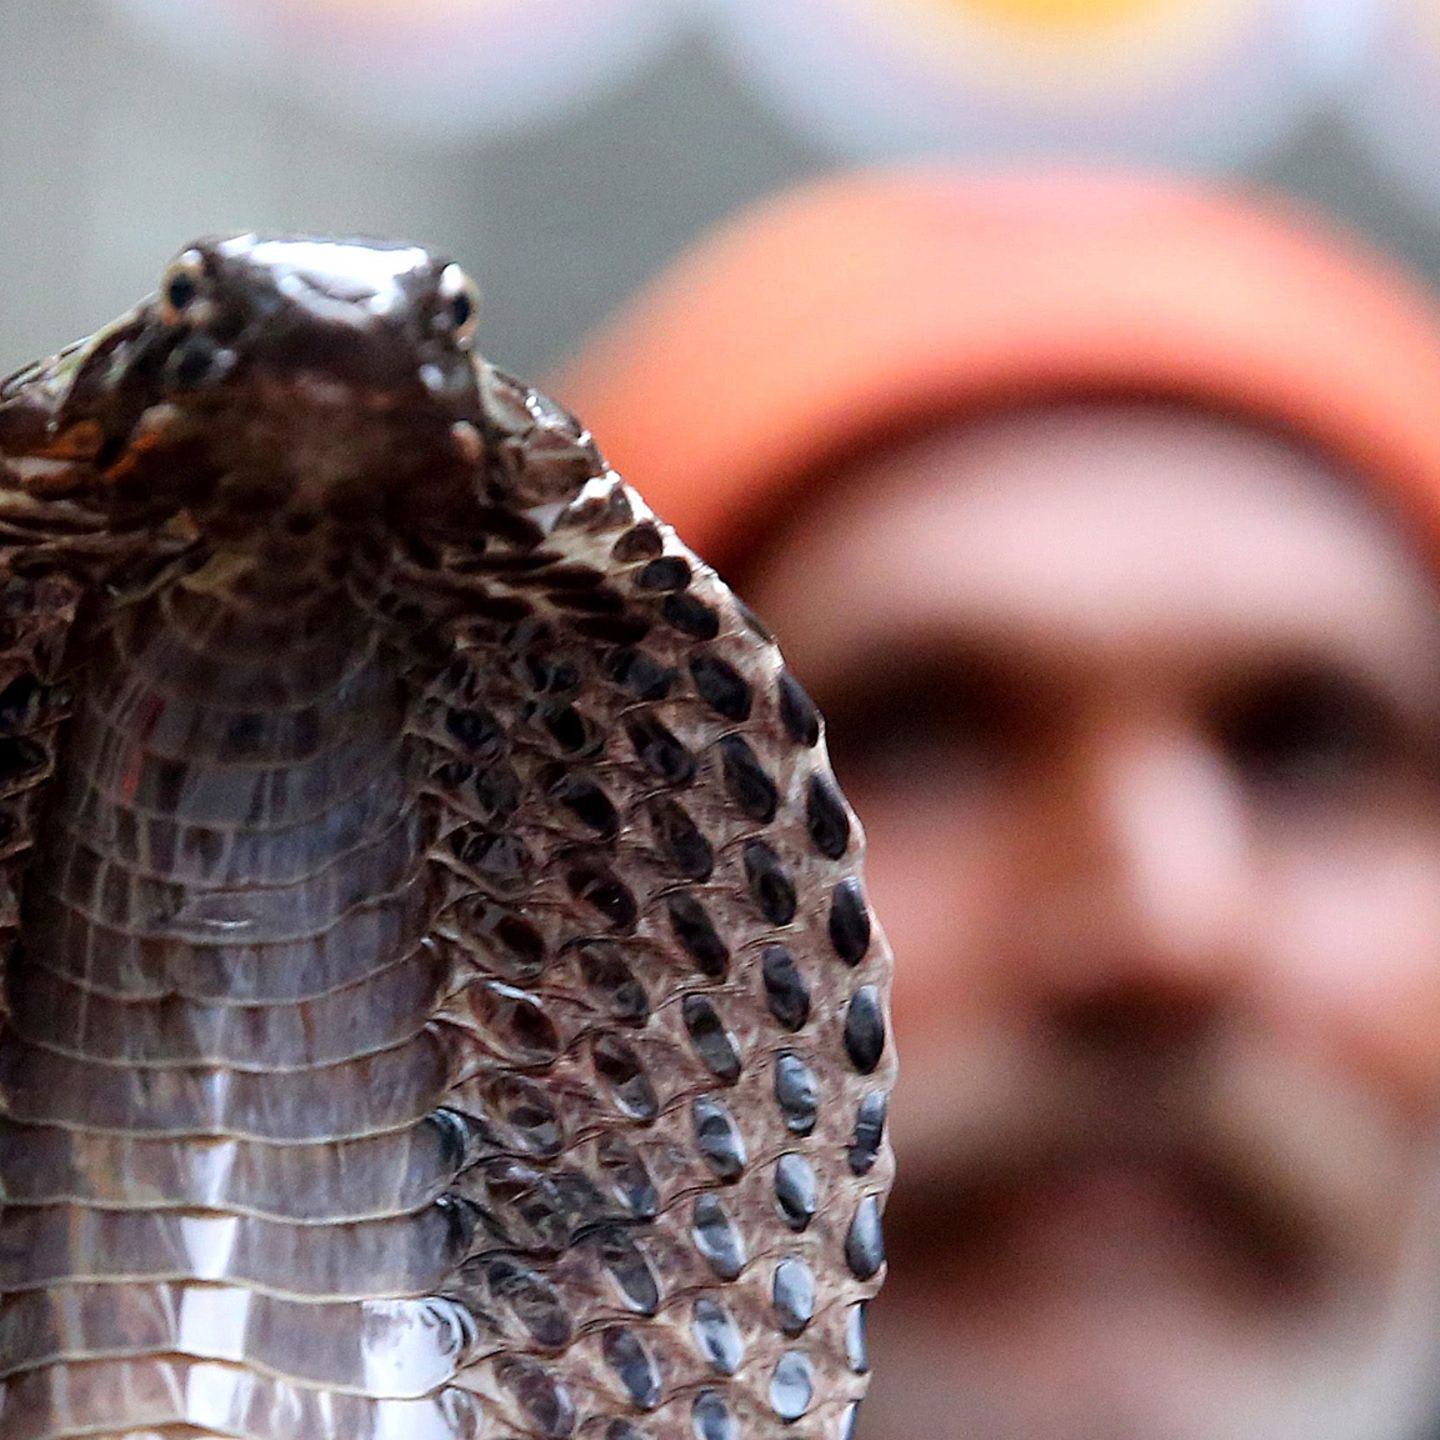 Indien Kobra Beisst Touristen Schlangenbeschworer Macht Alles Falsch Stern De